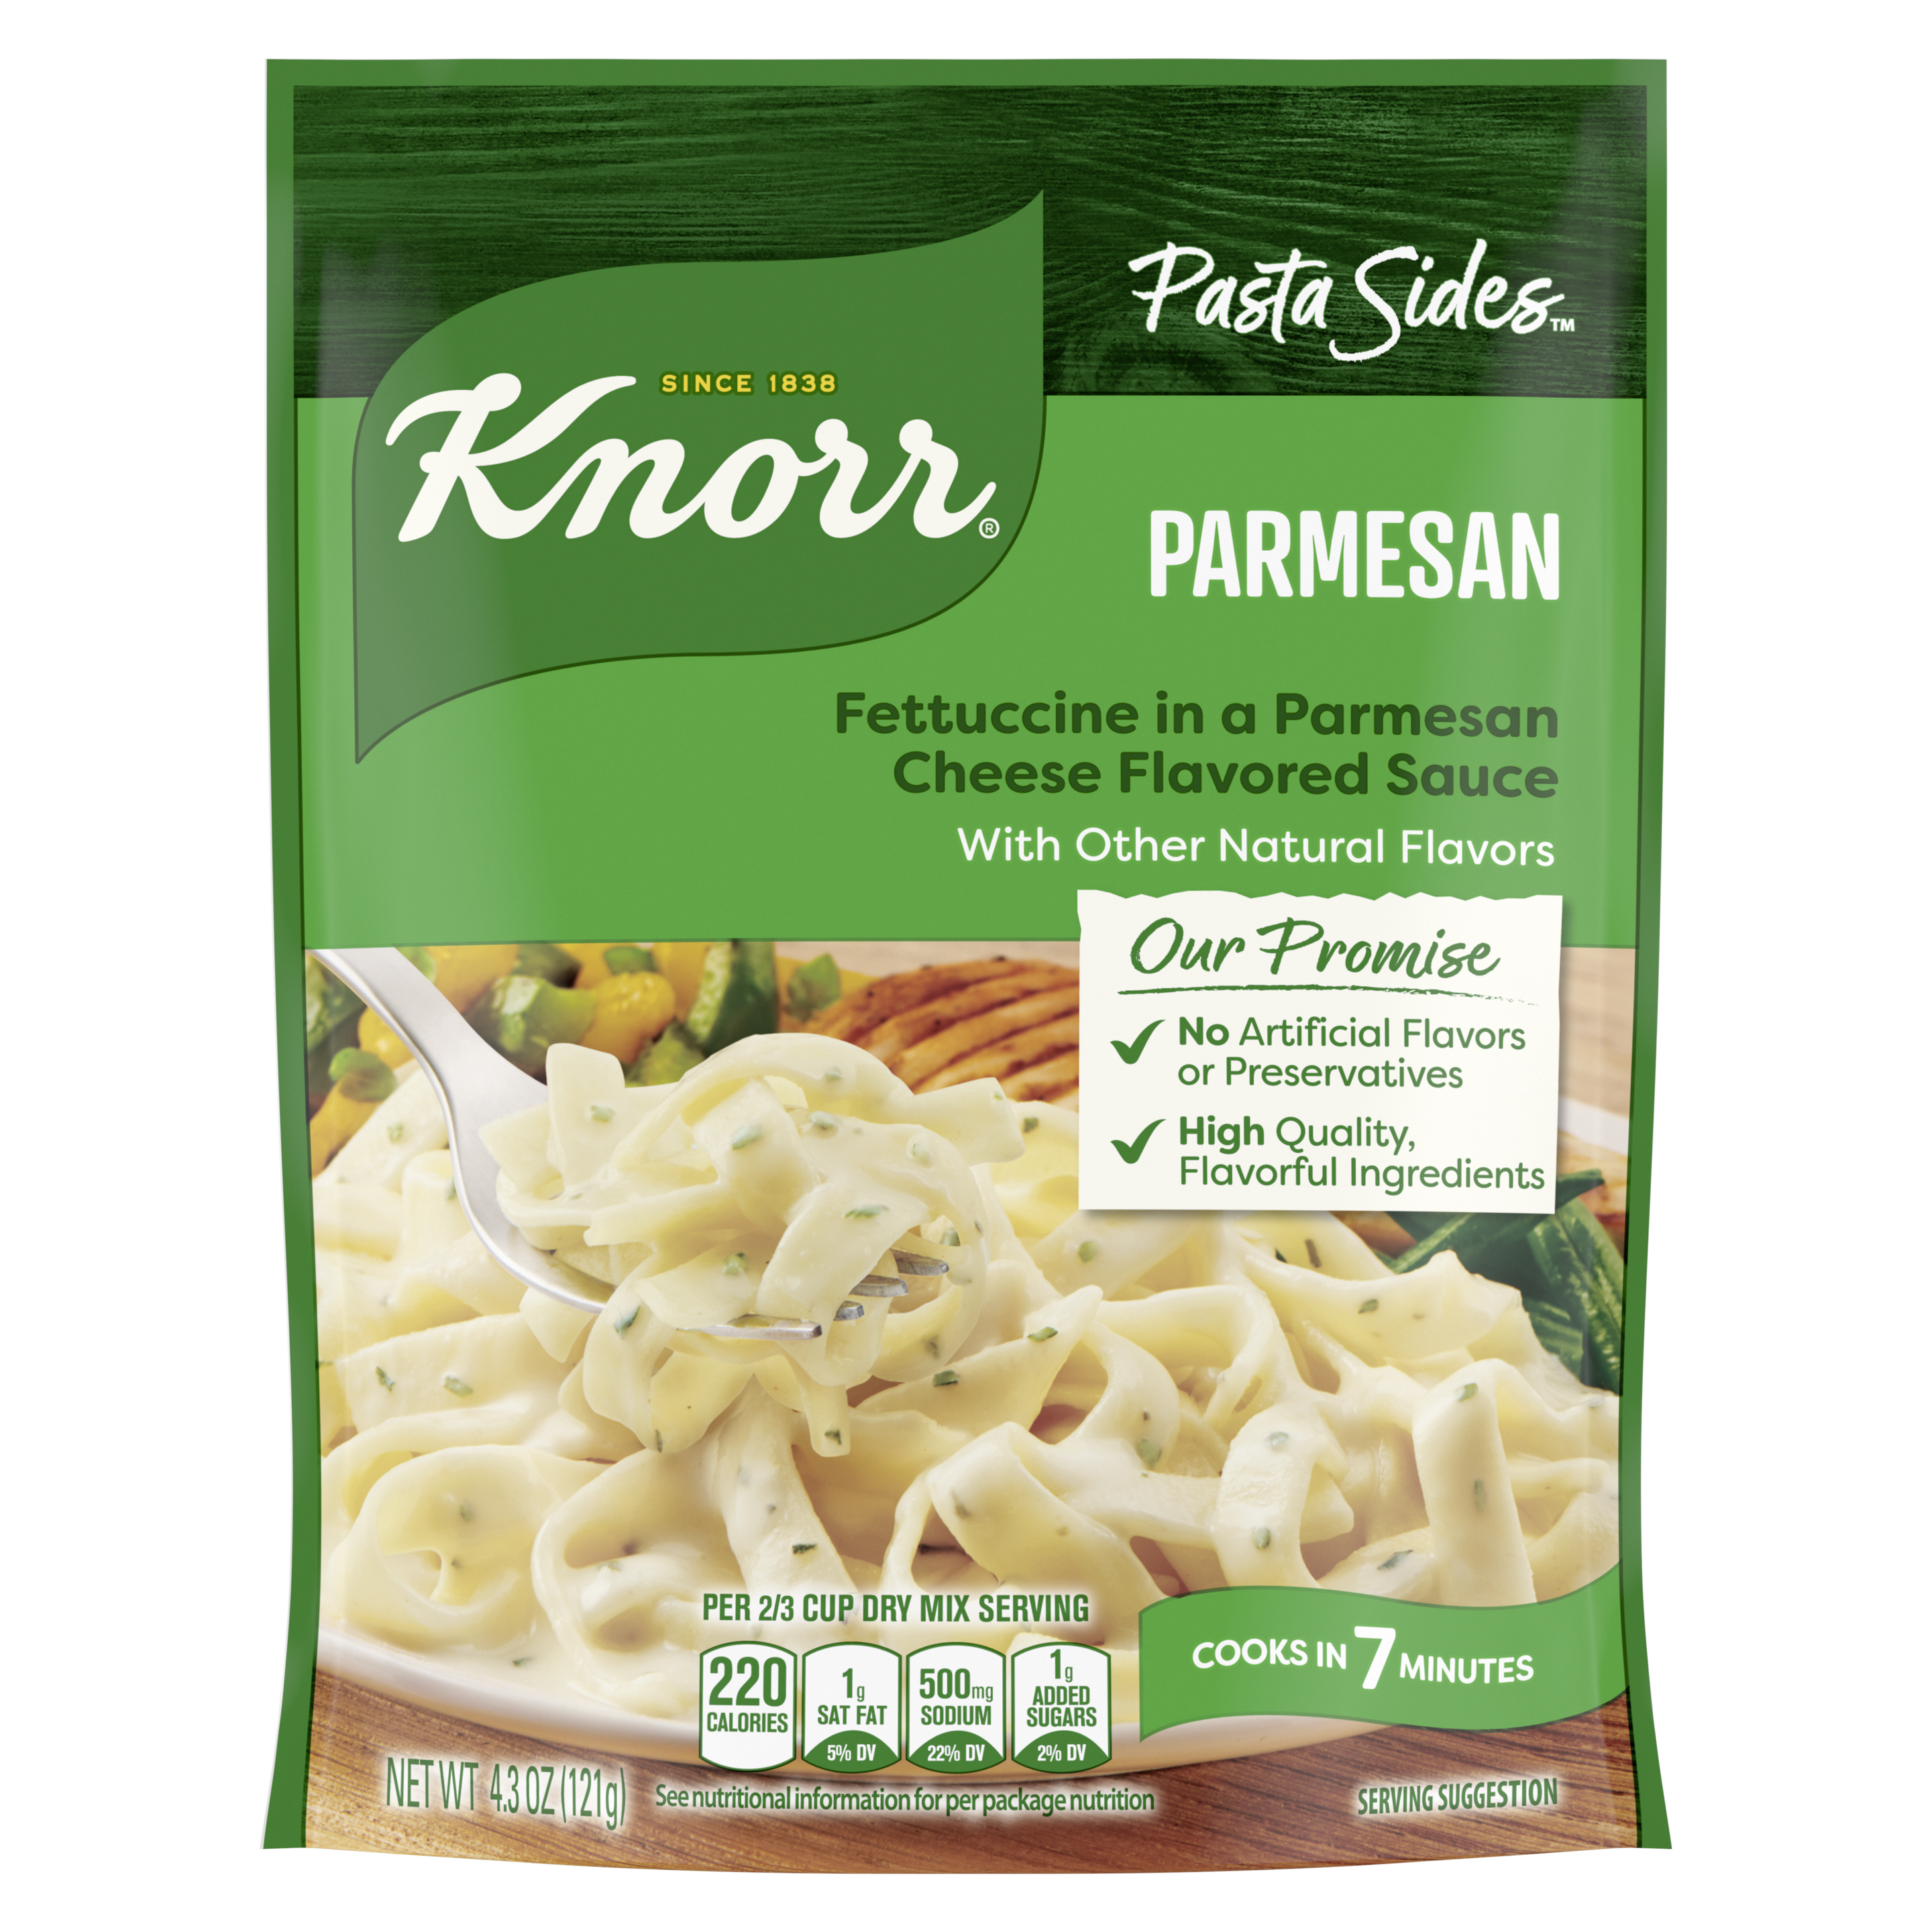 Knorr Parmesan Pasta